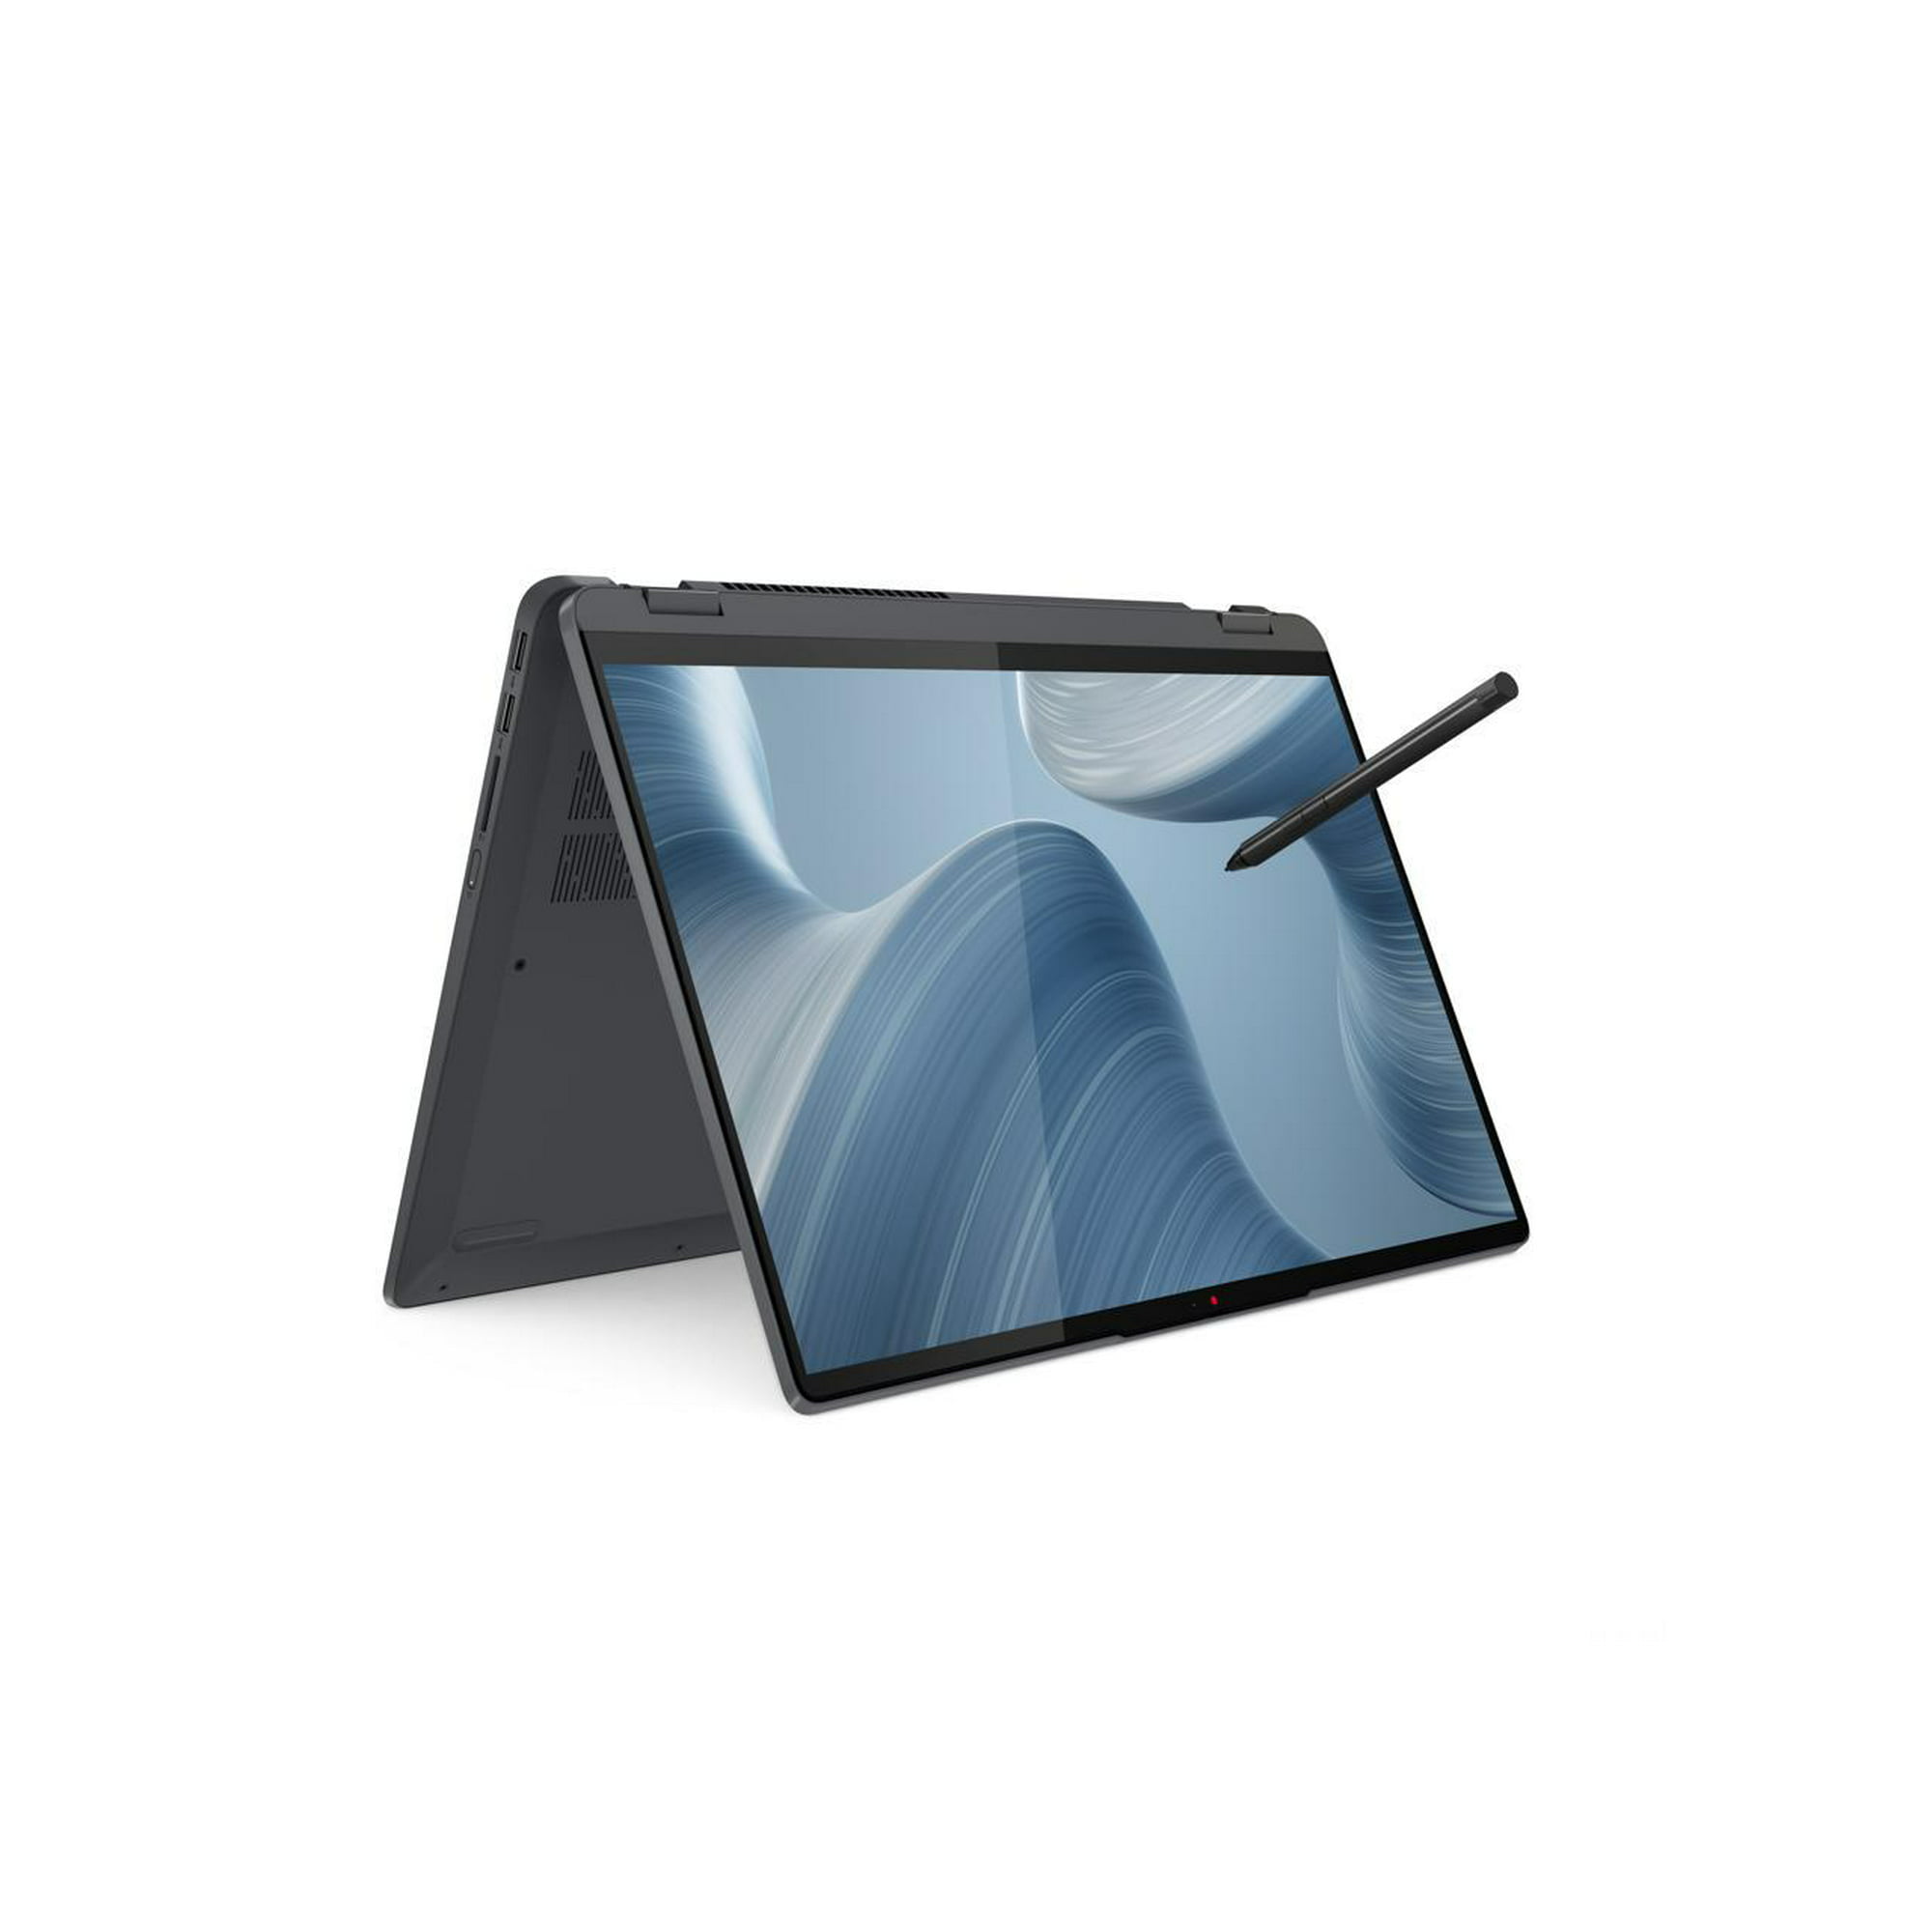 Flex 5 2-in-1 Touch Laptop: 16" 2560x1600, DDR4, 512GB SSD